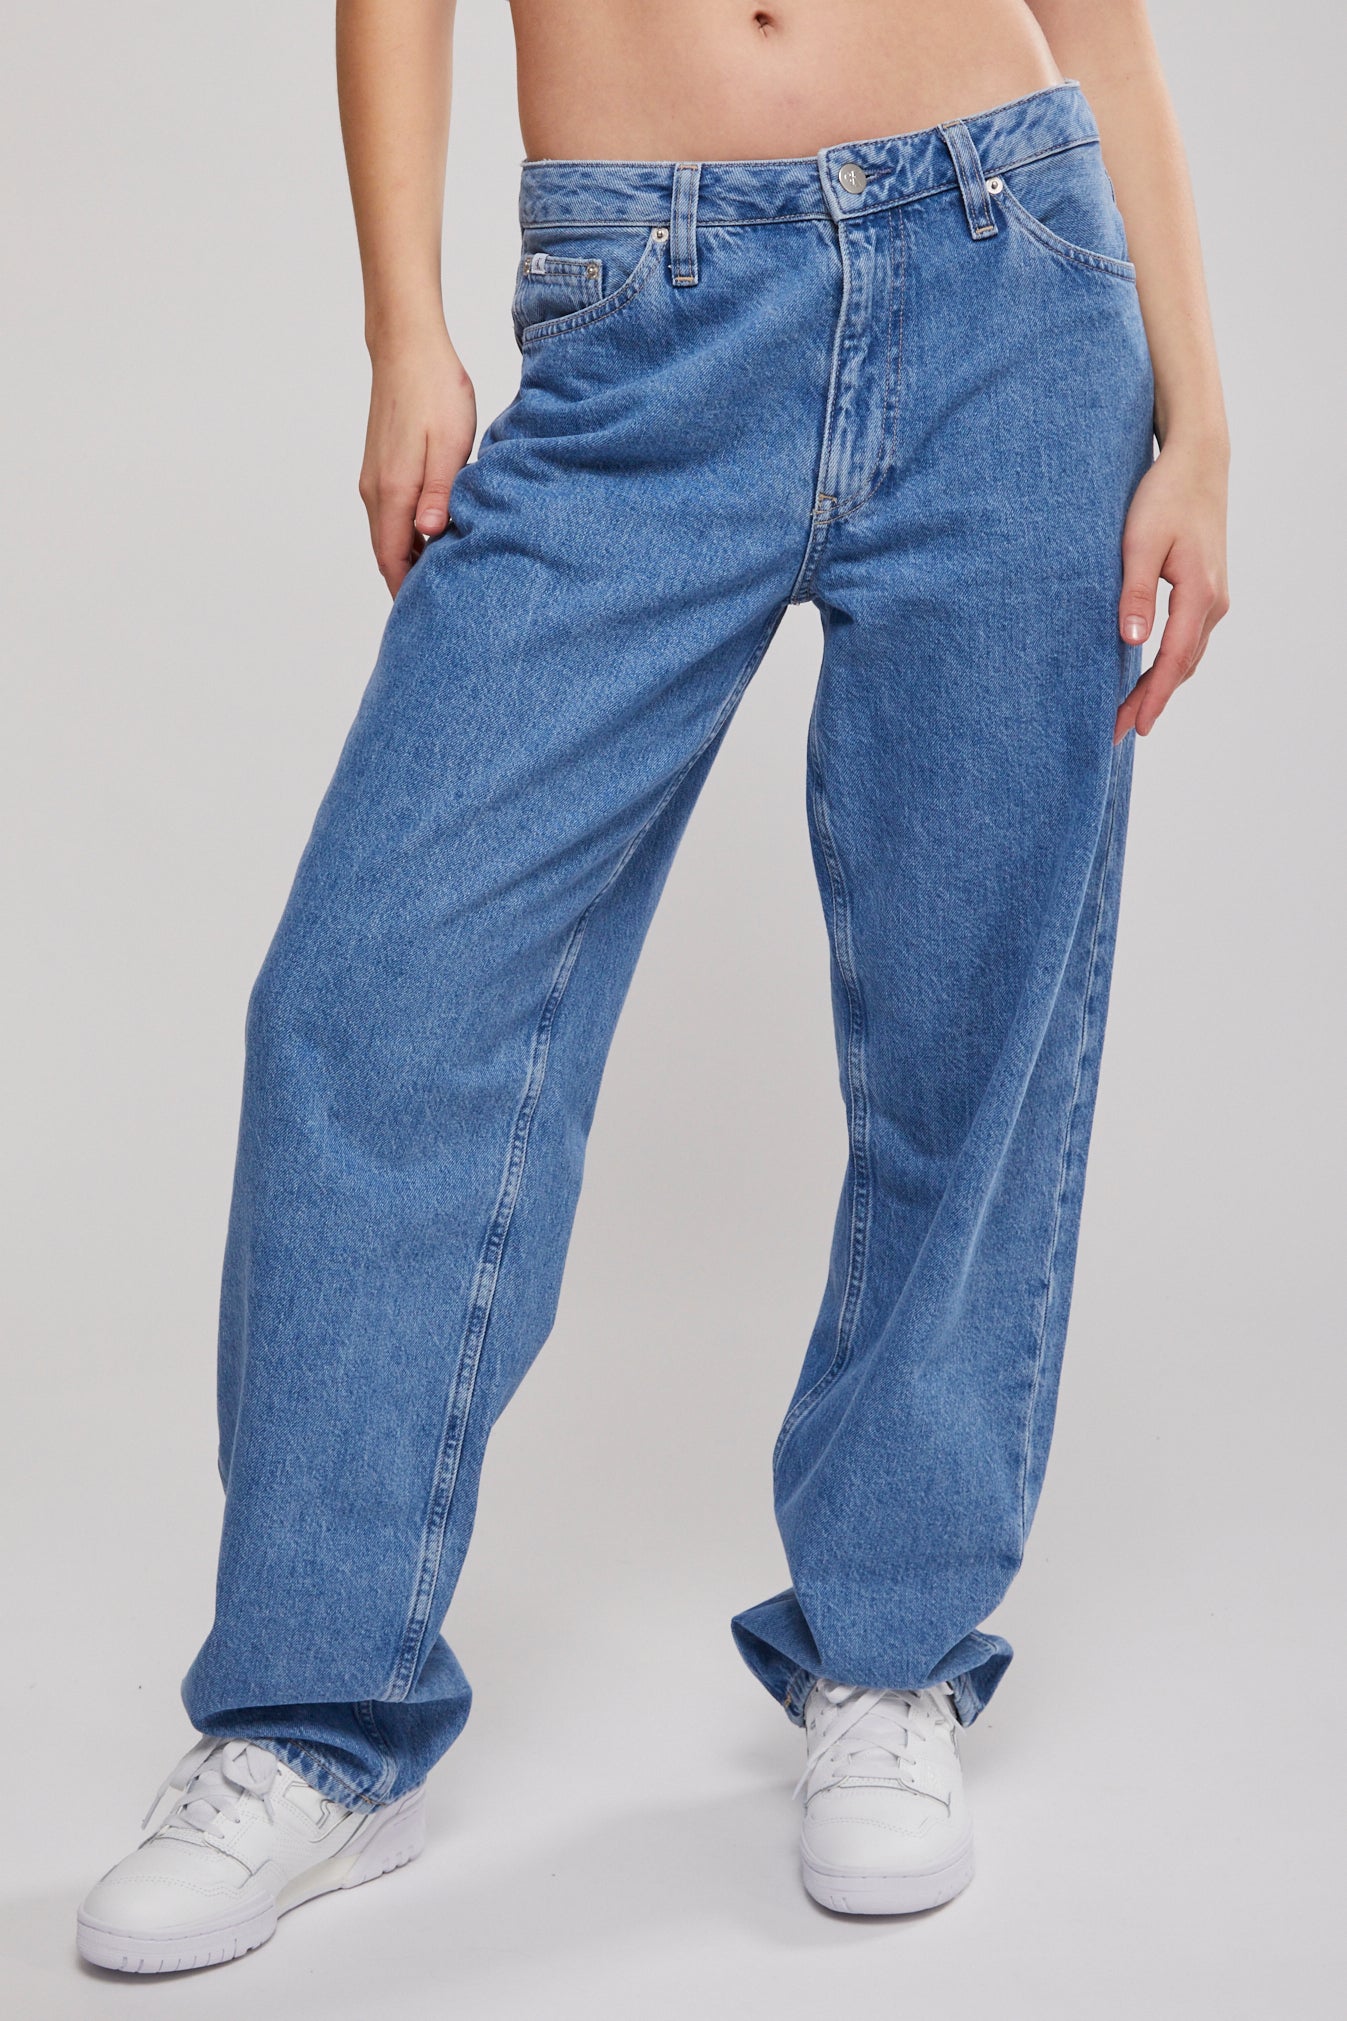 '90s Straight Jeans | North Beach